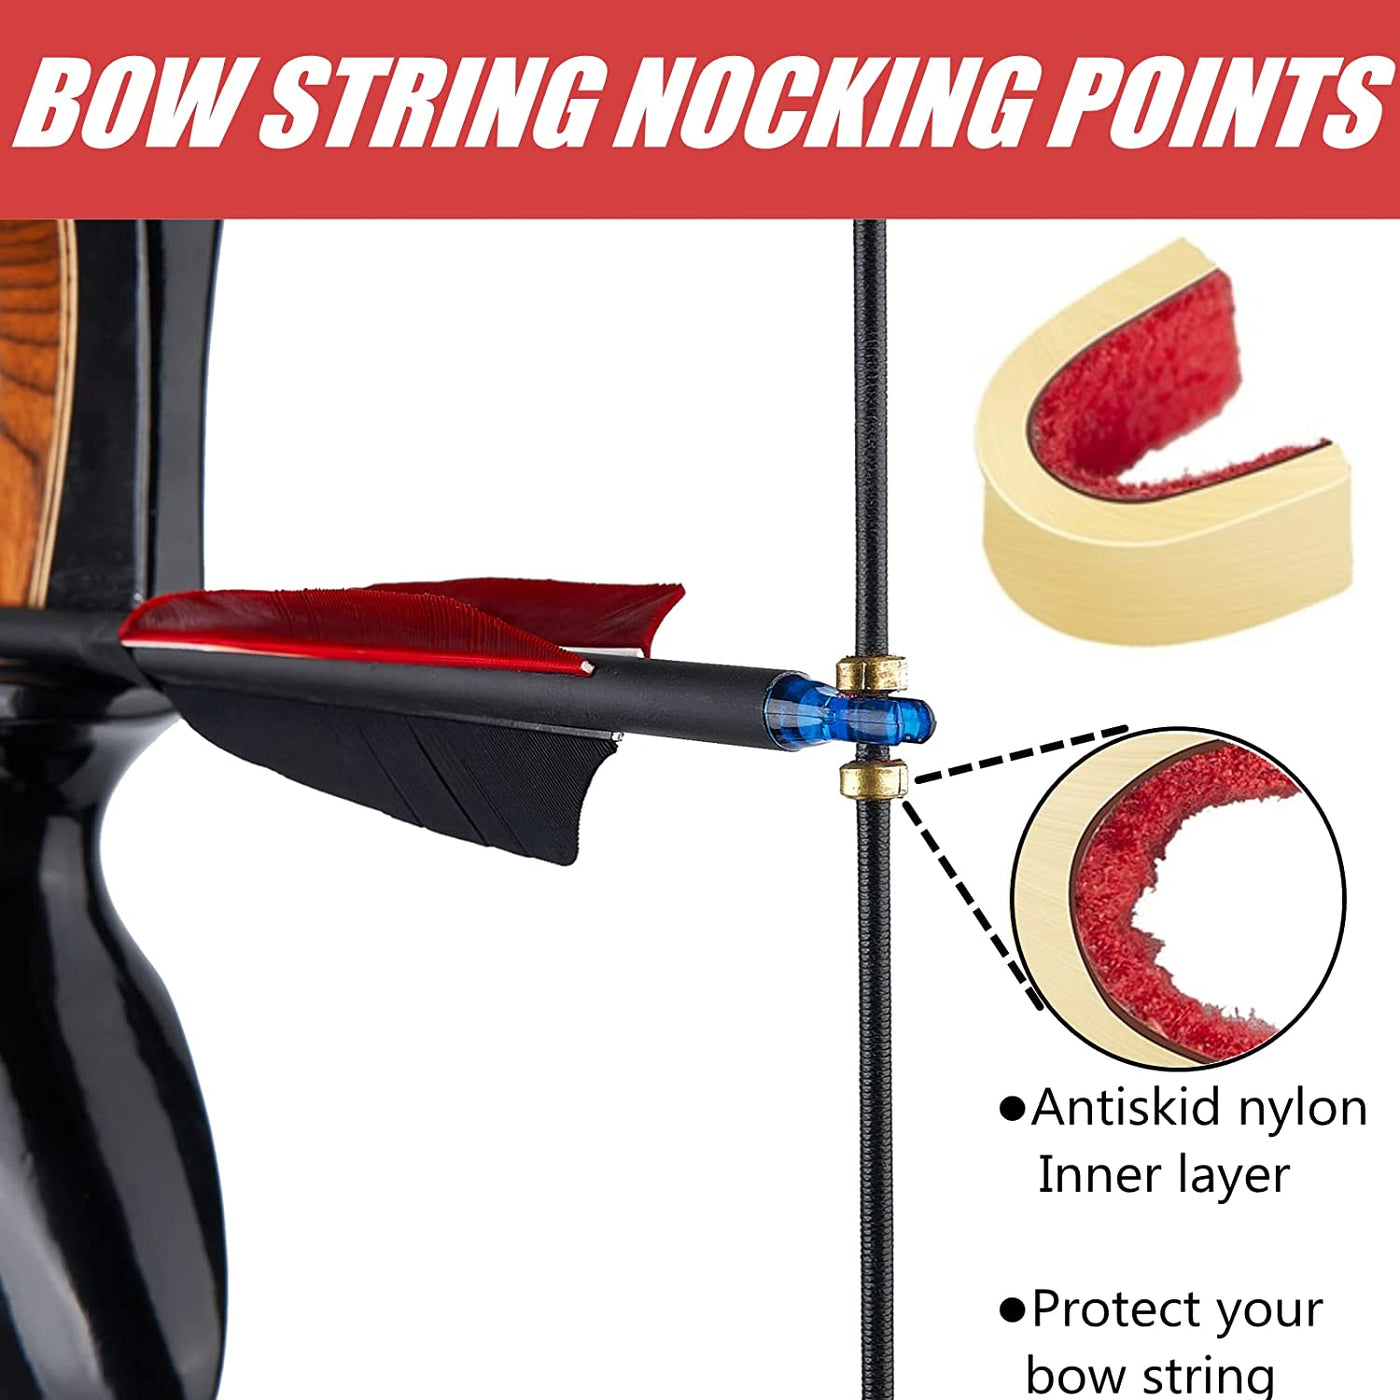 6X Archery Arrow Bow Strings Buckle Clip Nock Set Copper Nocking Points  String